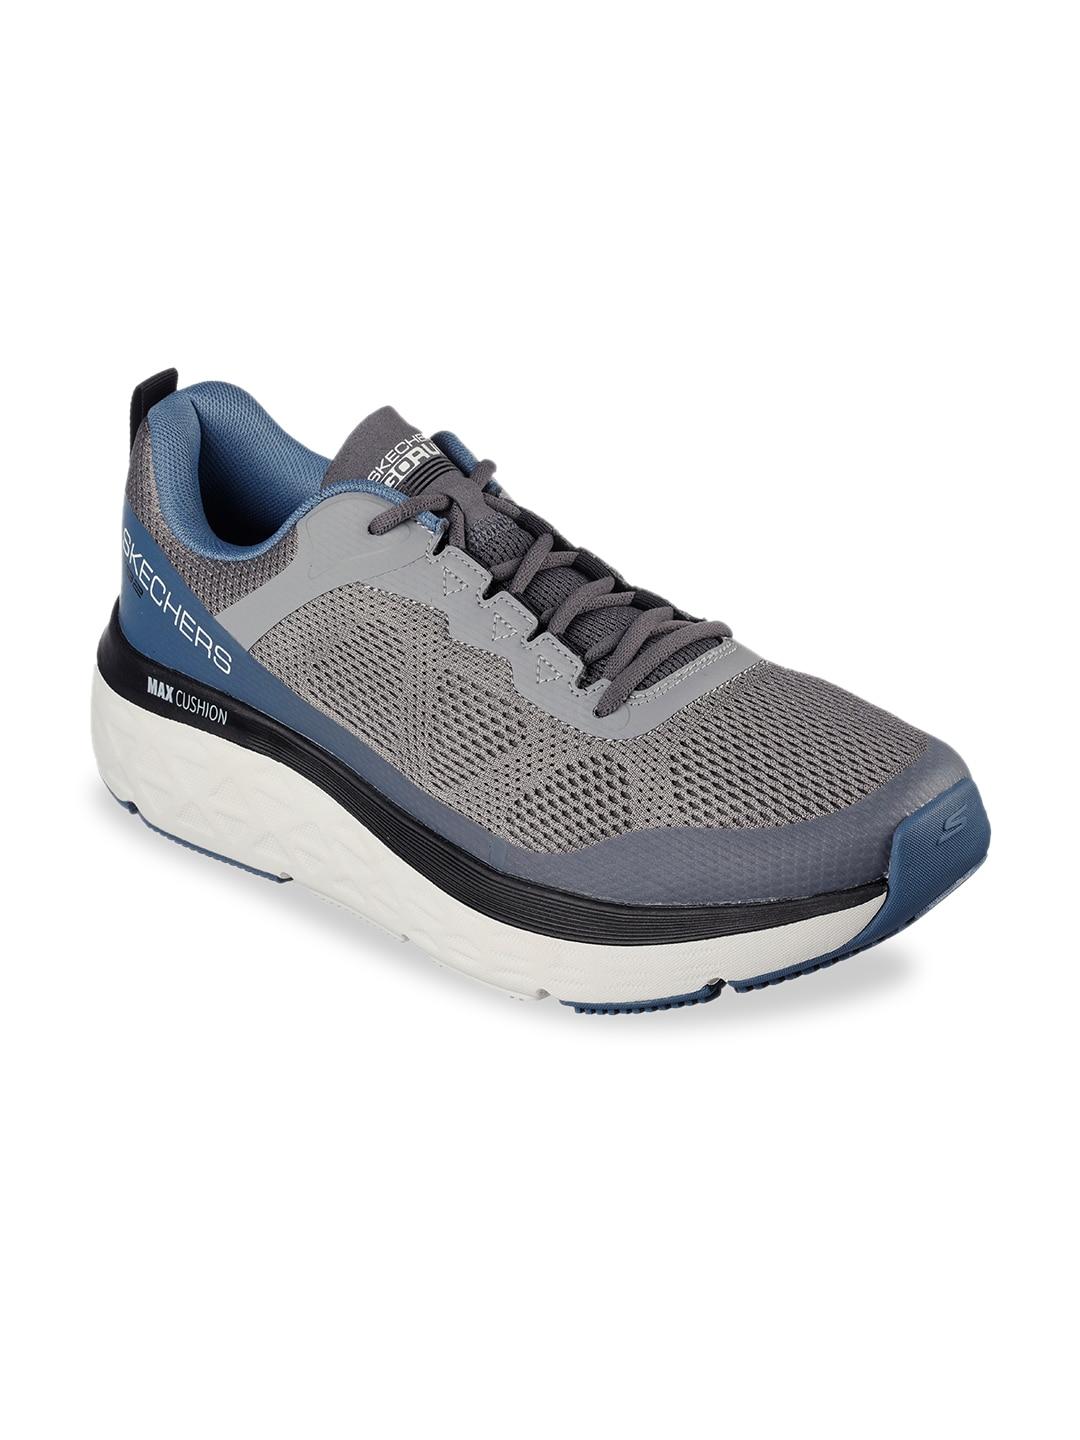 skechers-men-grey-max-cushioning-running-non-marking-shoes